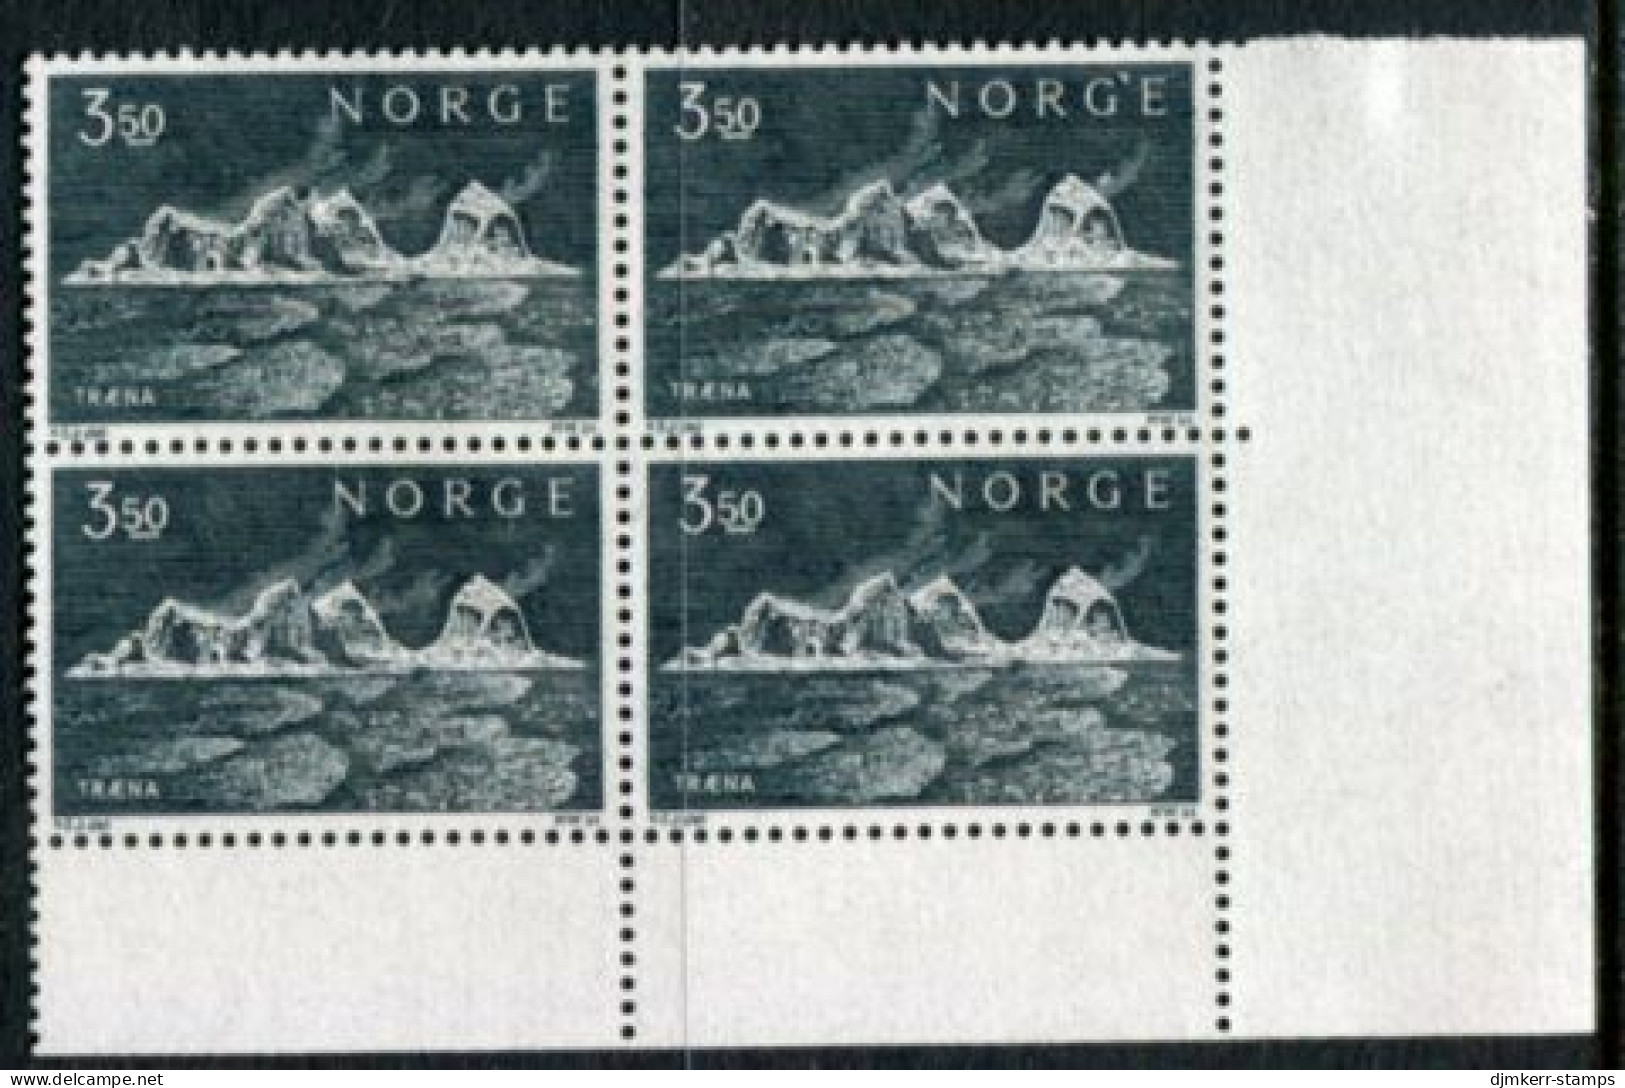 NORWAY 1969 Traena Islands Block Of 4 MNH / **.  Michel 587 - Unused Stamps